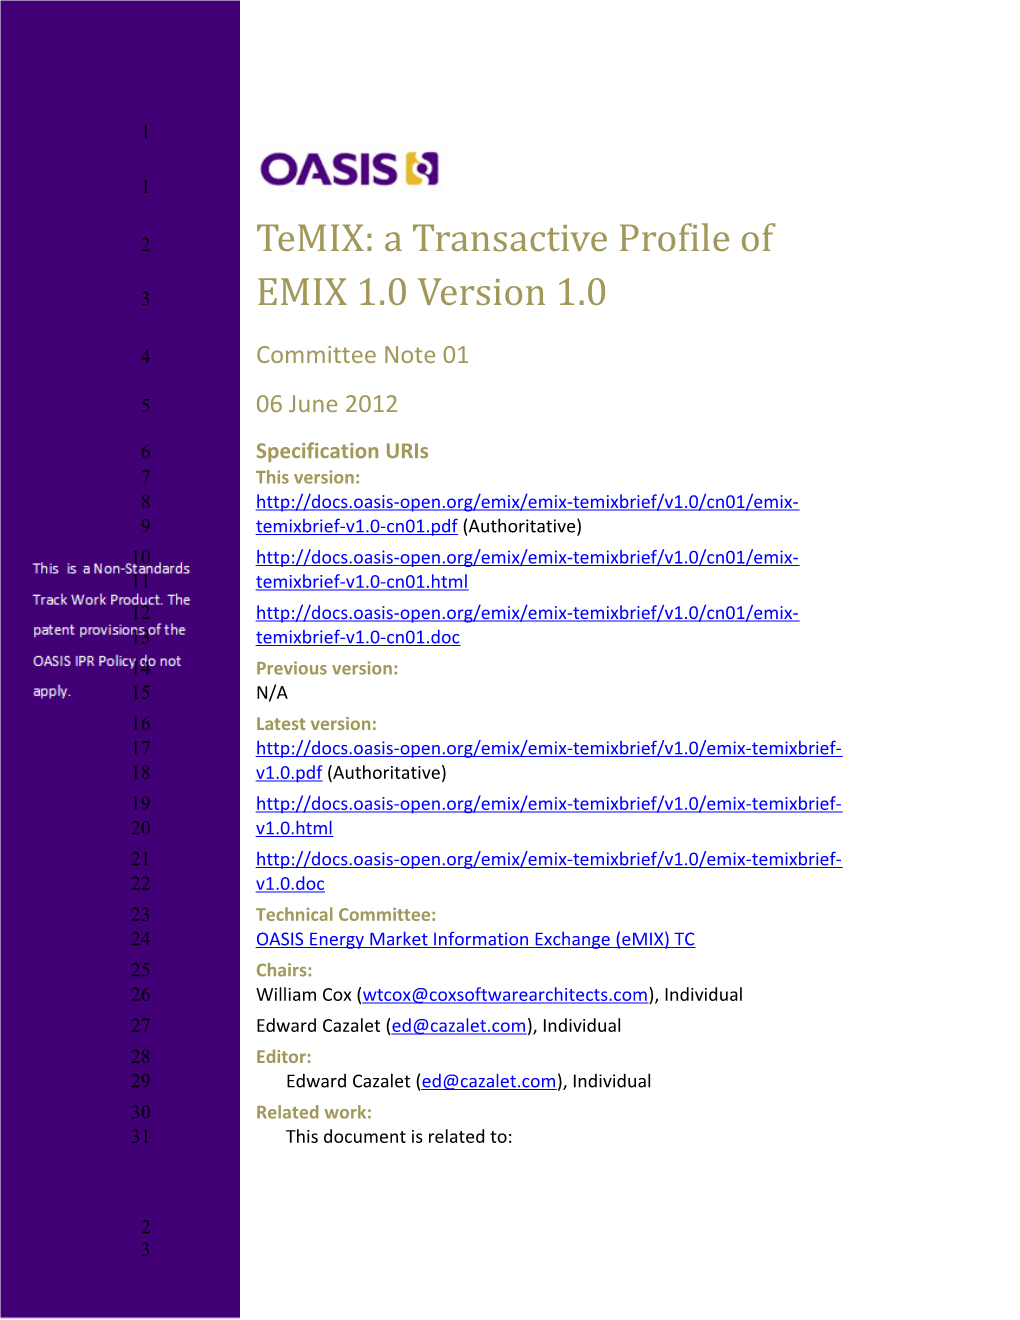 Temix: a Transactive Profile of EMIX 1.0 Version 1.0